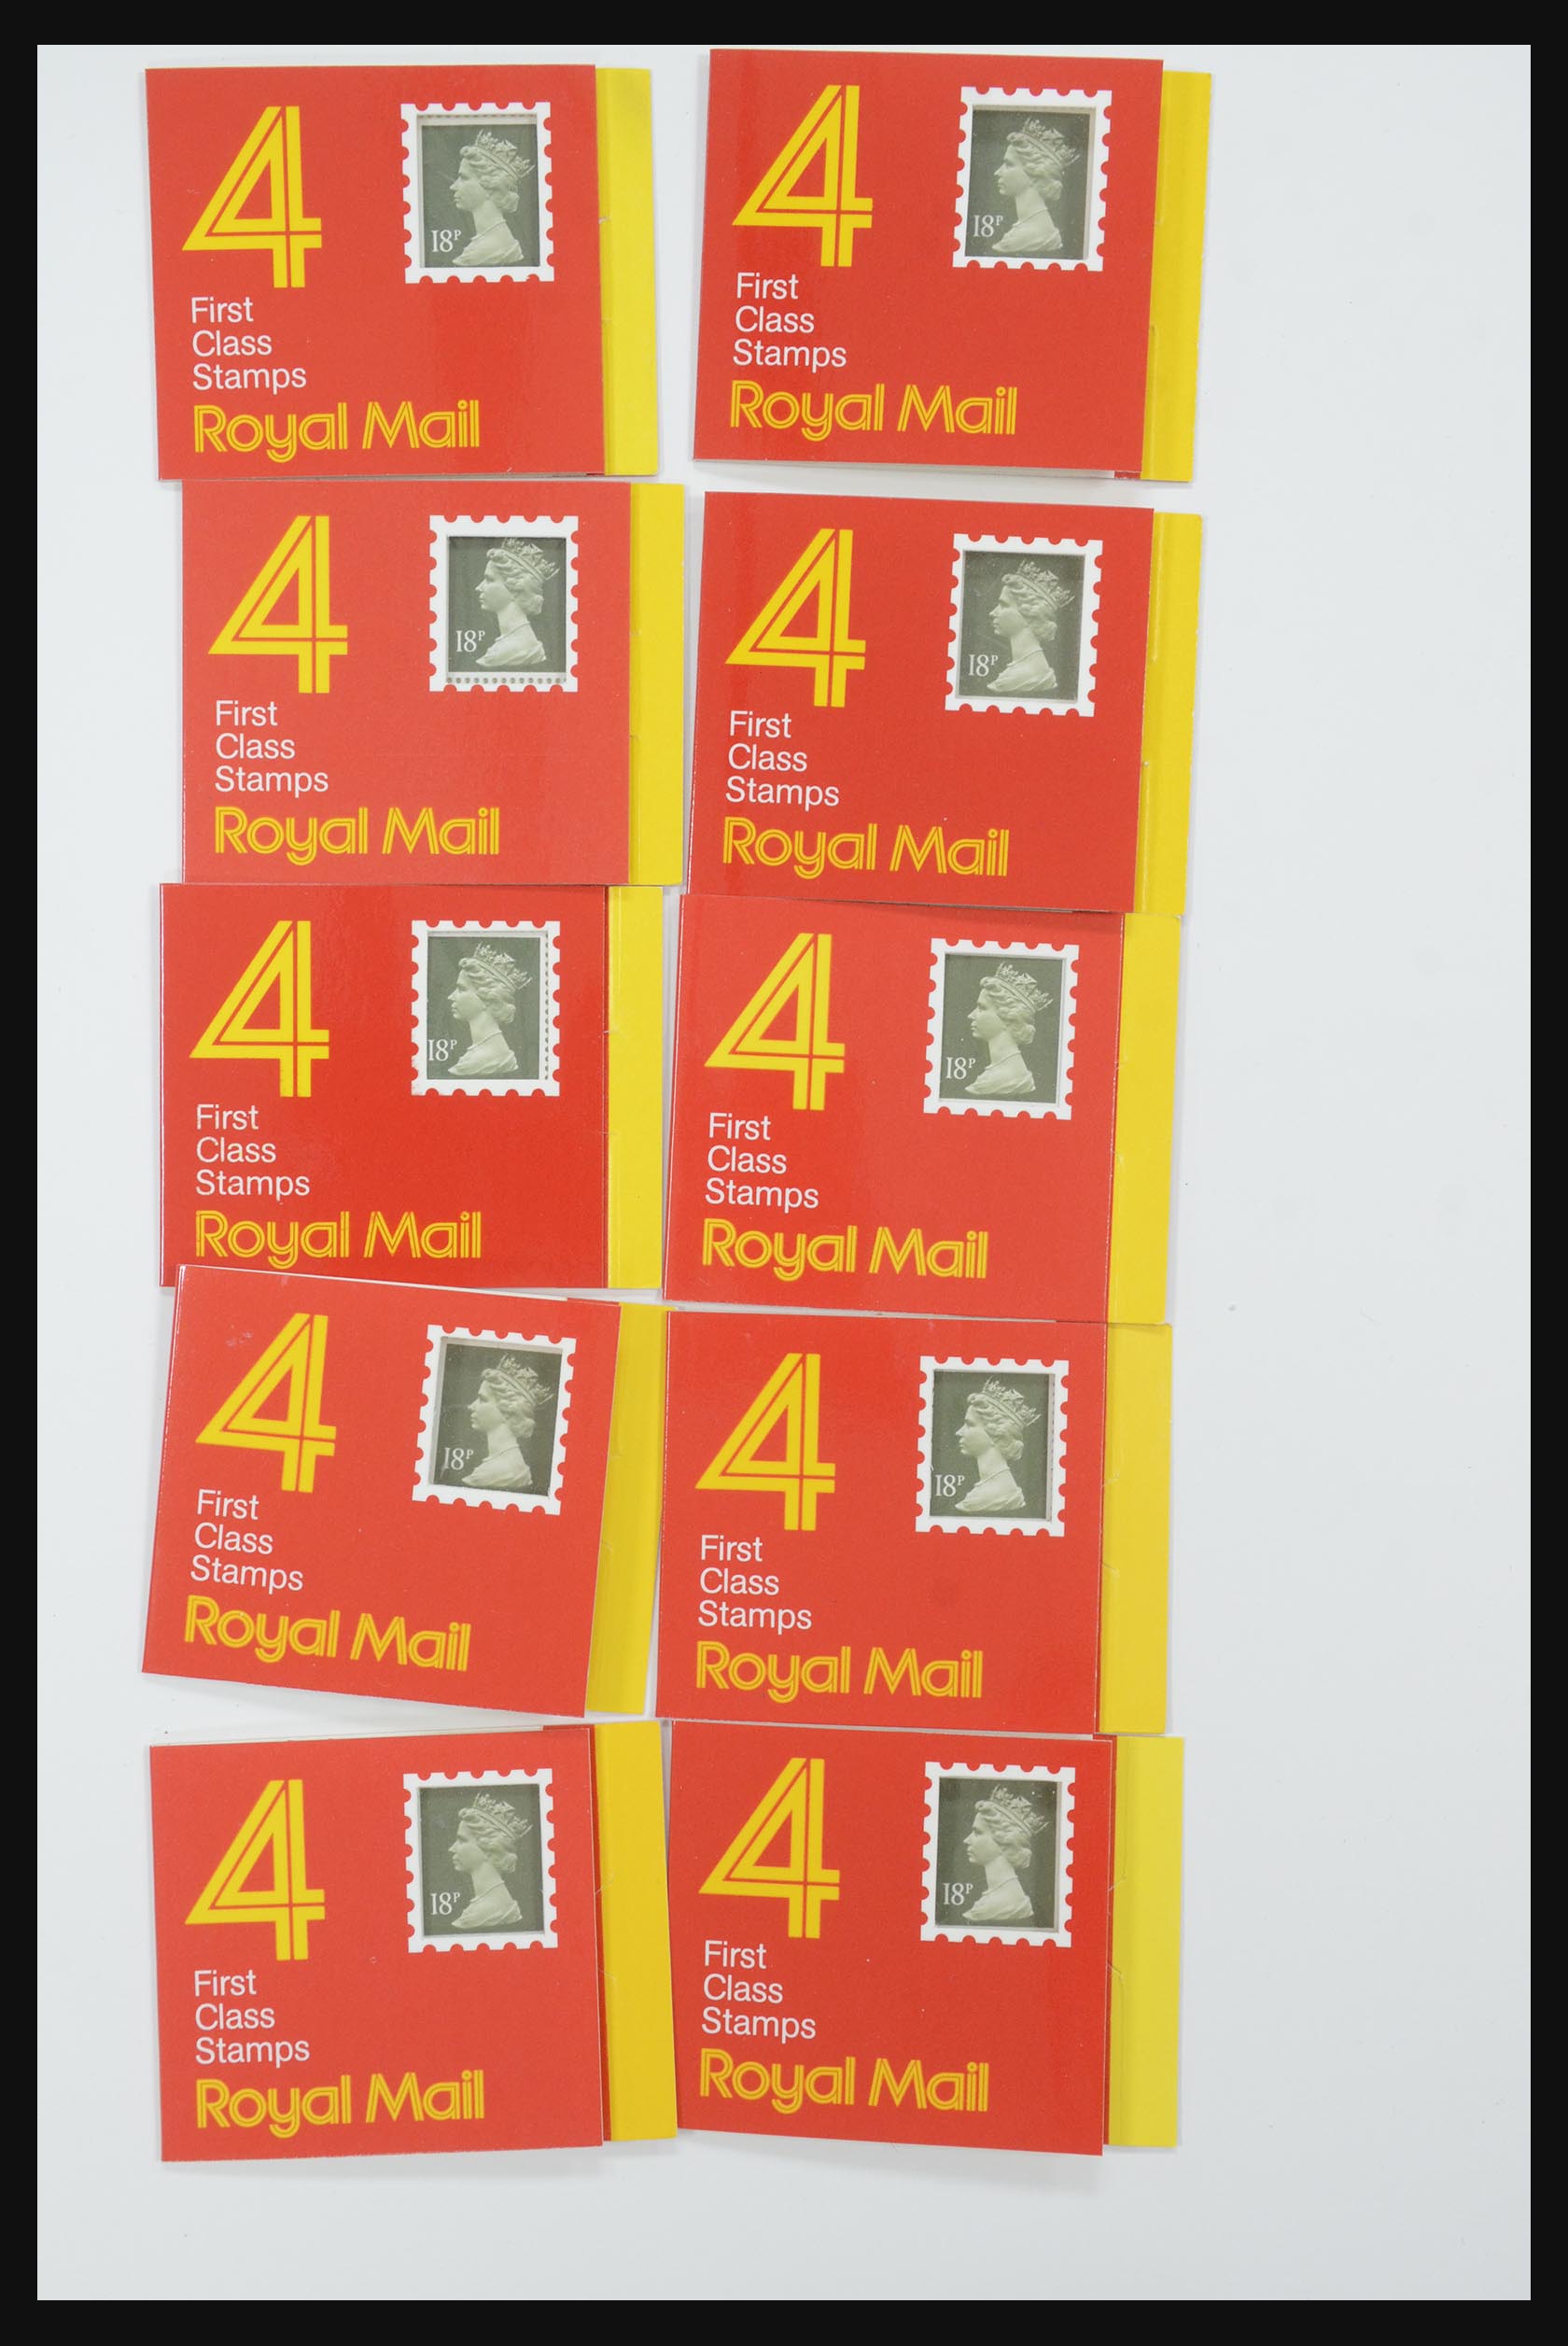 31961 054 - 31961 Great Britain stampbooklets 1971-1999.